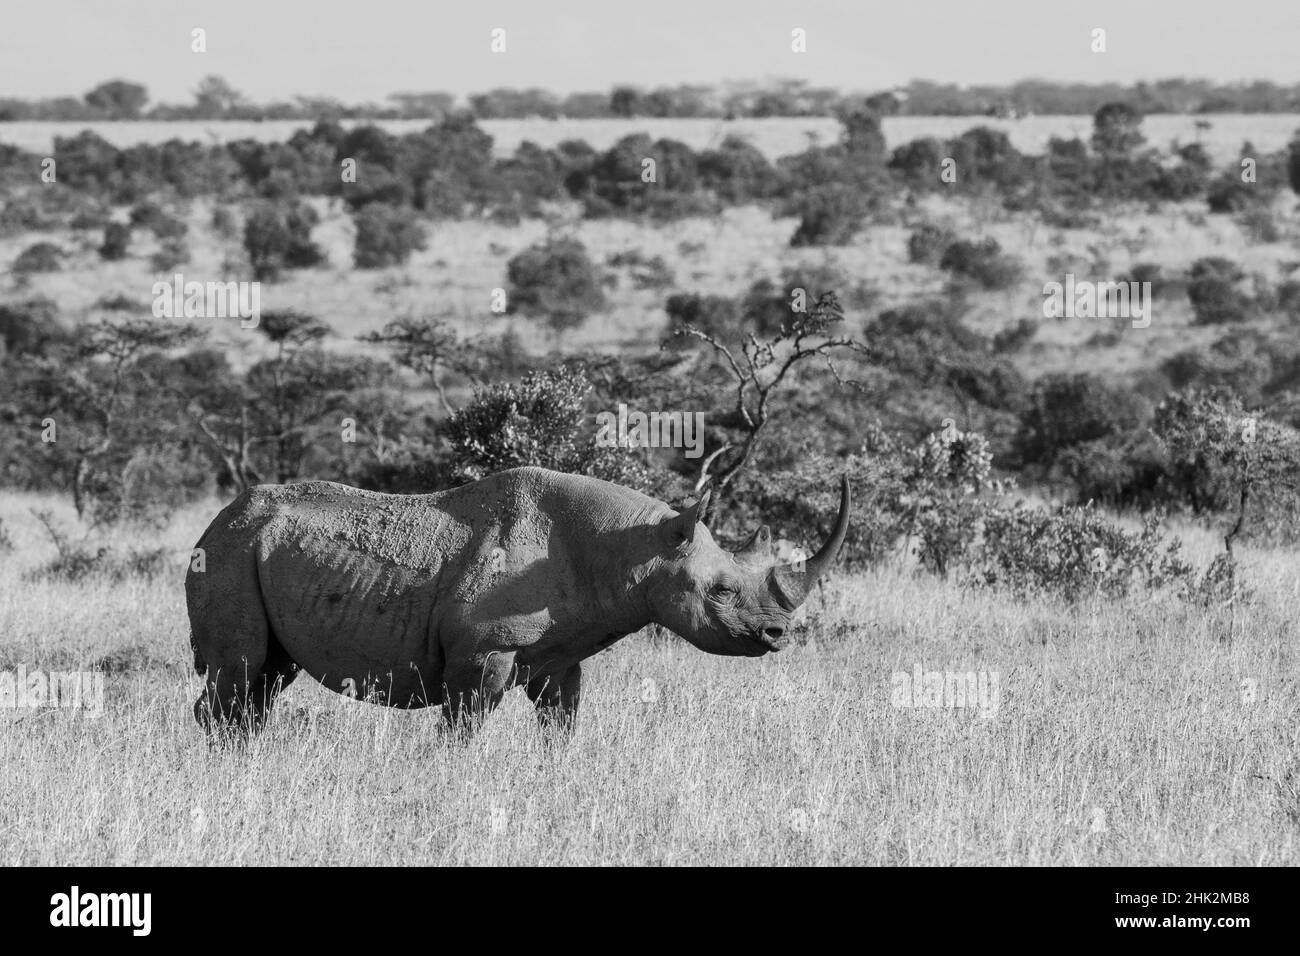 Africa, Kenya, Ol Pejeta Conservancy. Rinoceronte nero, aka specie a gancio, criticamente minacciate. Foto Stock